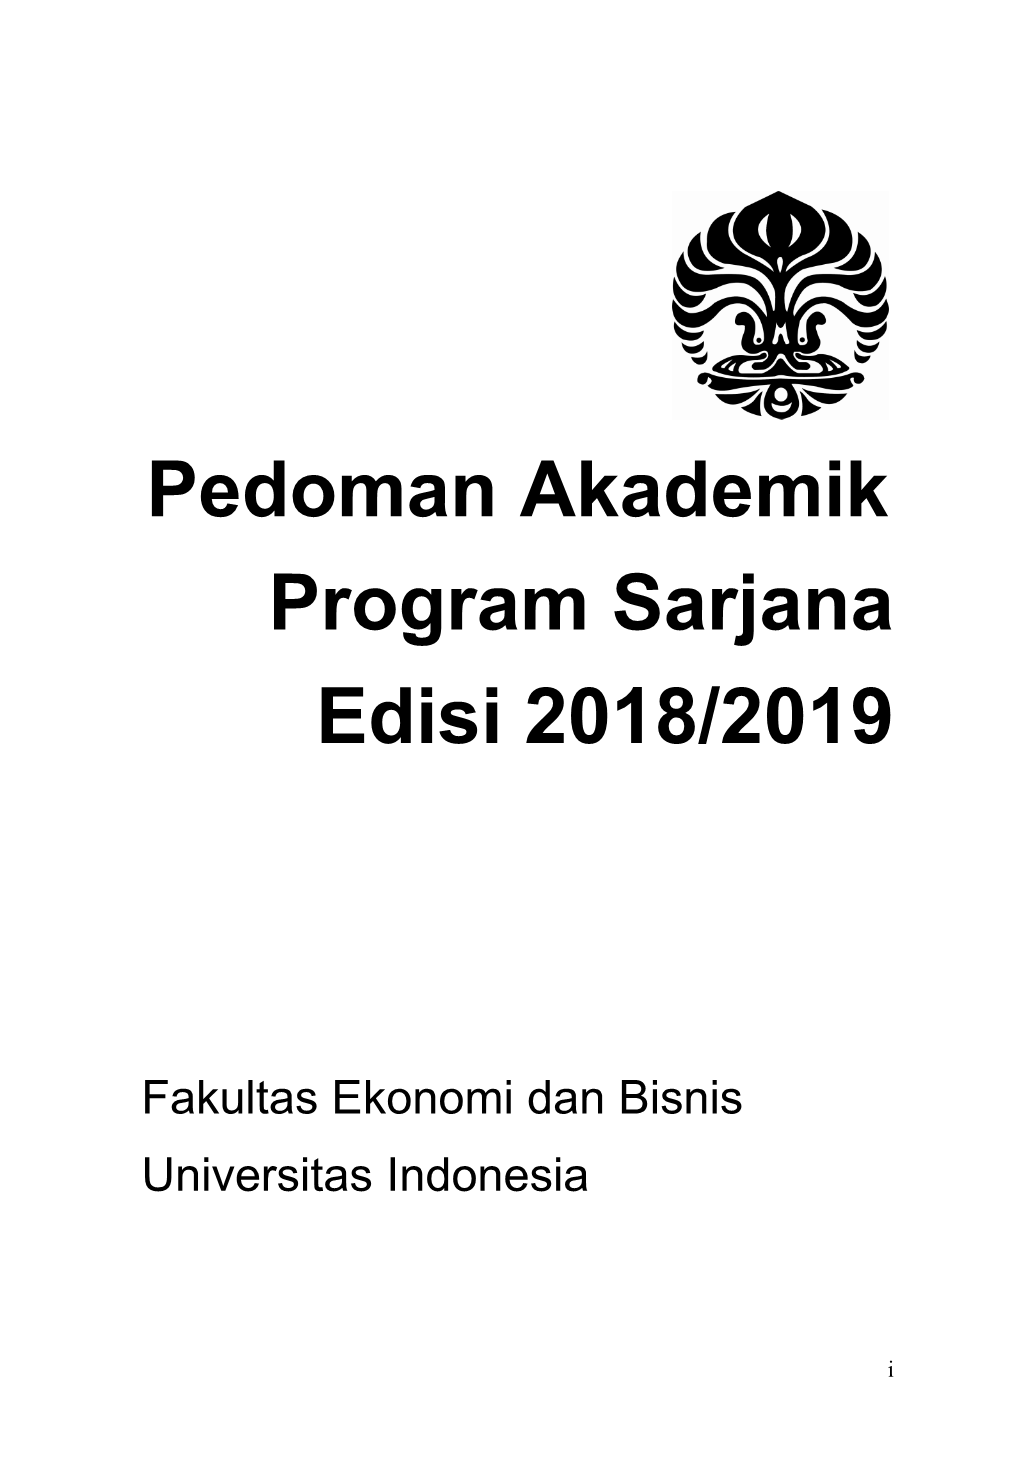 Pedoman Akademik Program Sarjana Edisi 2018/2019